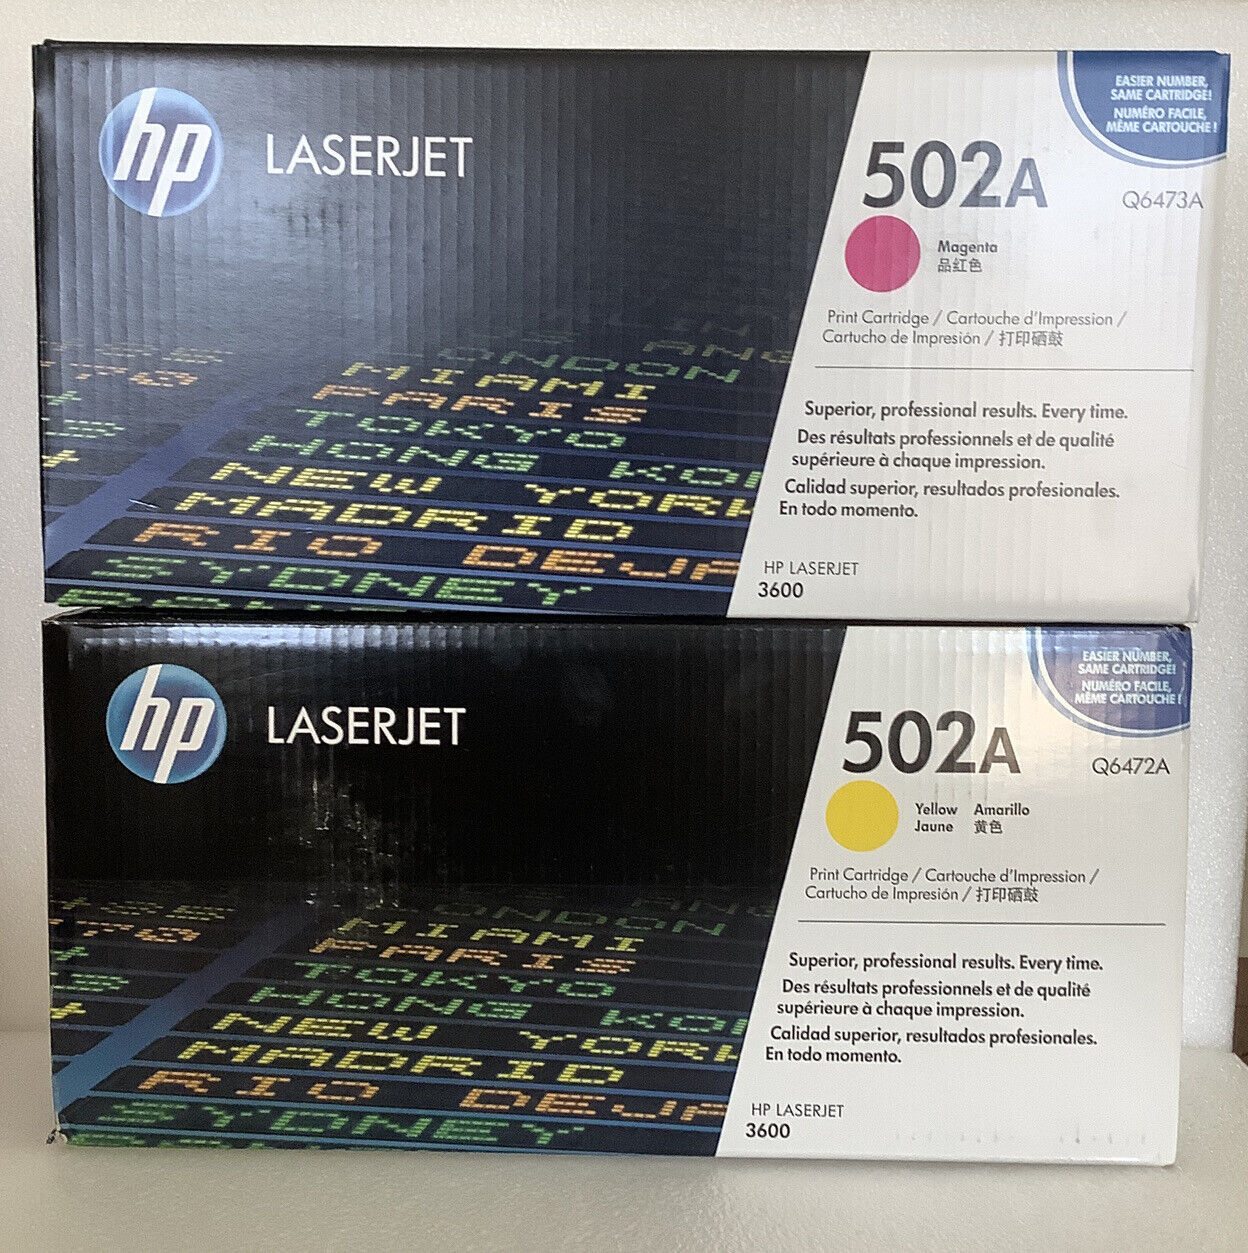 New OEM/Genuine HP LaserJet Toner Print Cartridges 502A Yellow And Magenta